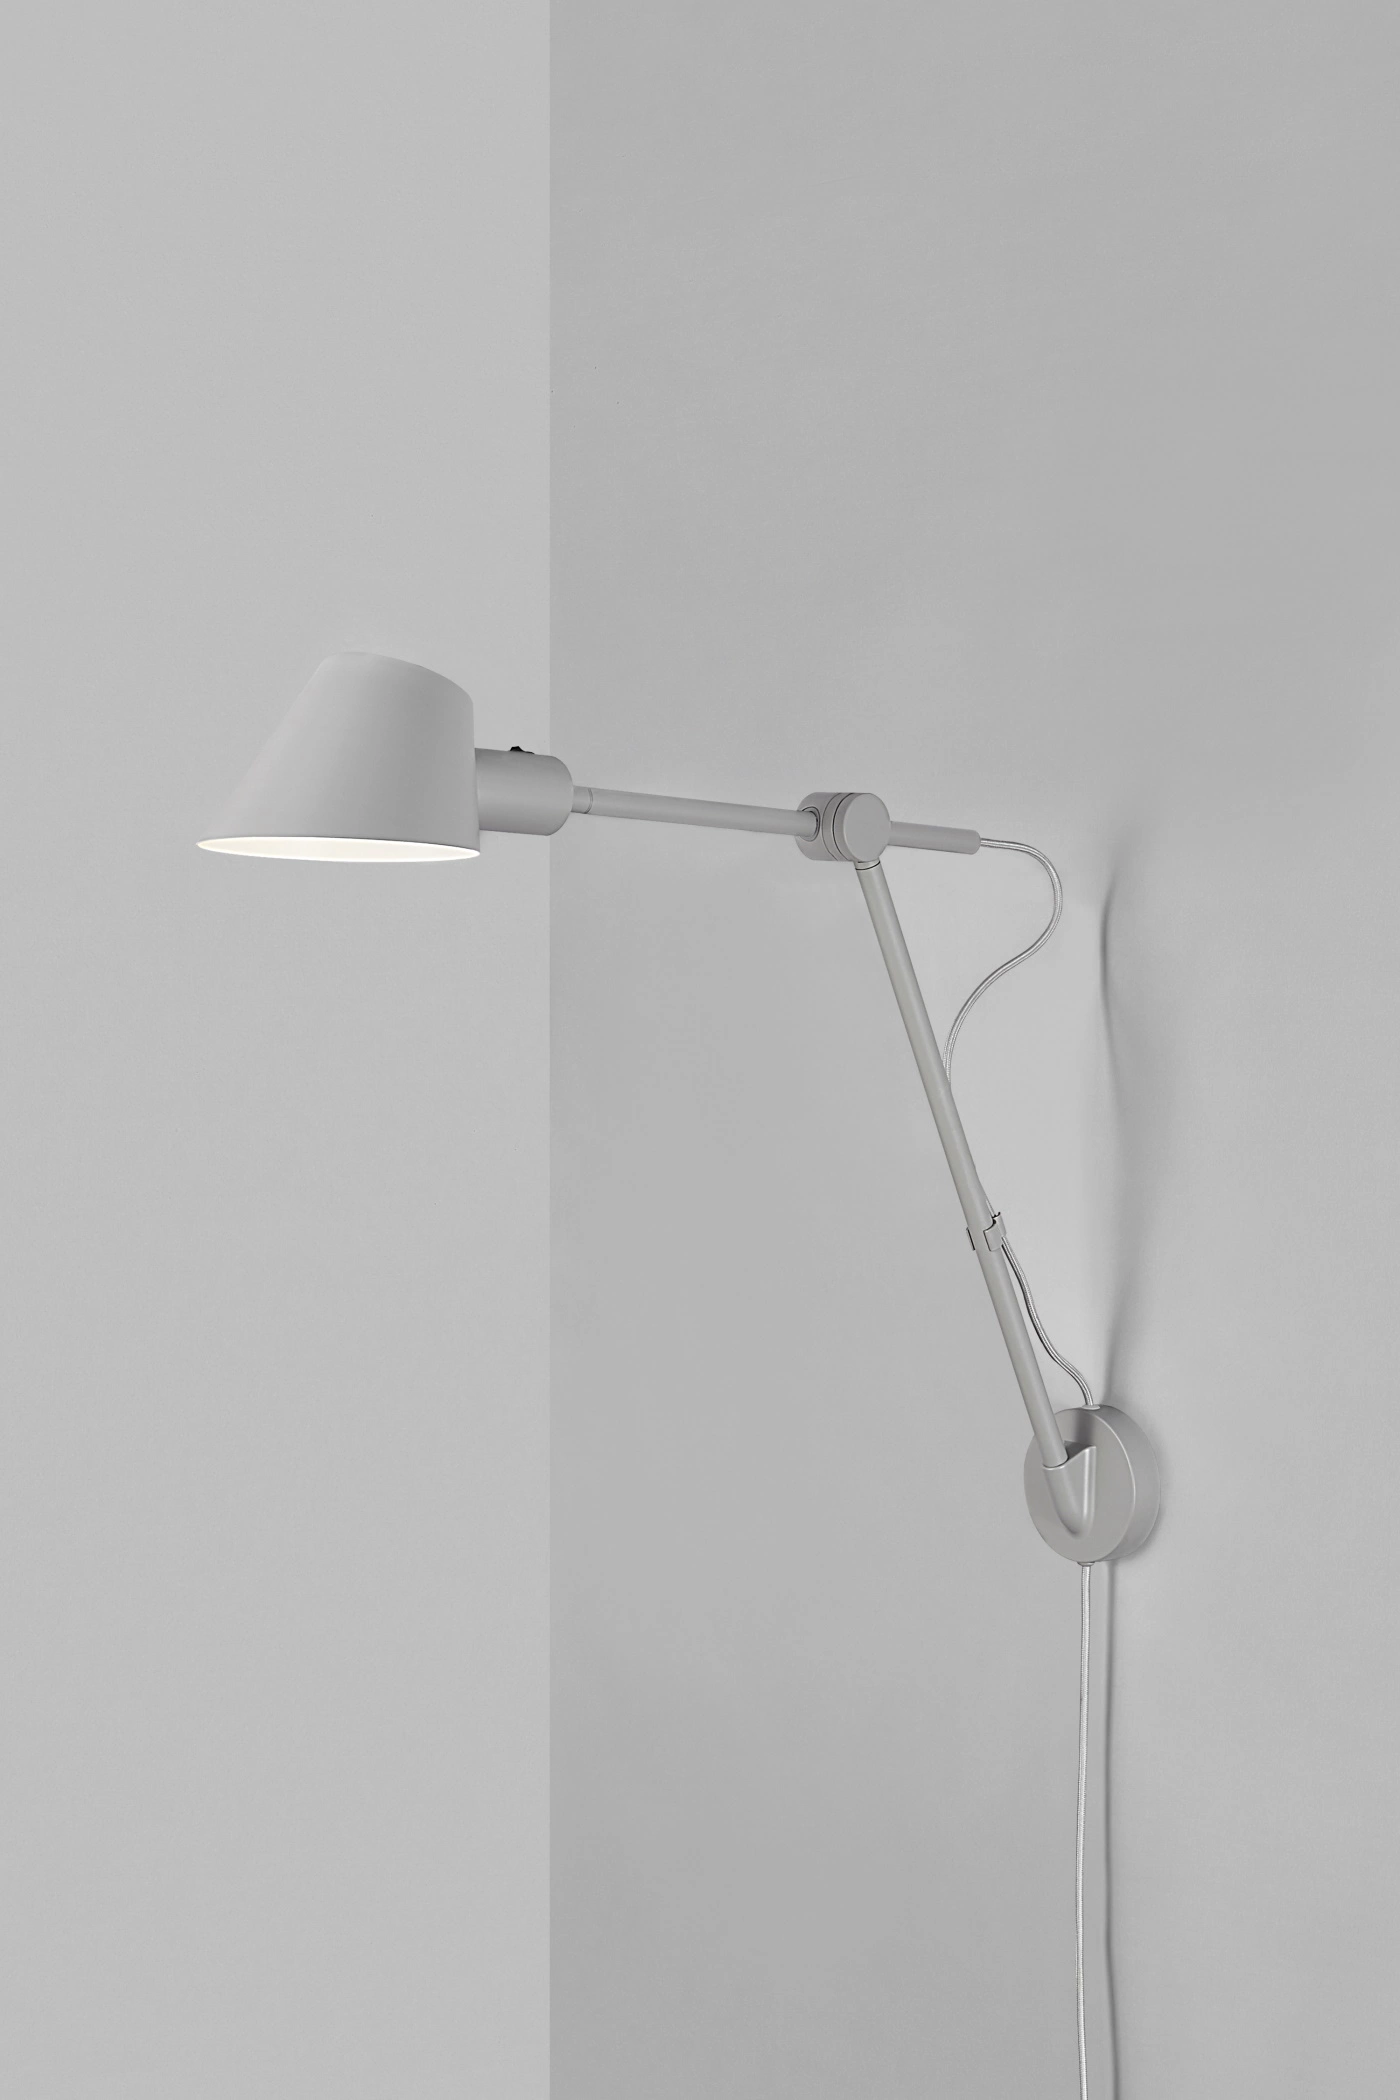   
                        
                        Бра NORDLUX (Дания) 59640    
                         в стиле Хай-тек.  
                        Тип источника света: светодиодная лампа, сменная.                                                 Цвета плафонов и подвесок: Серый.                         Материал: Металл.                          фото 5